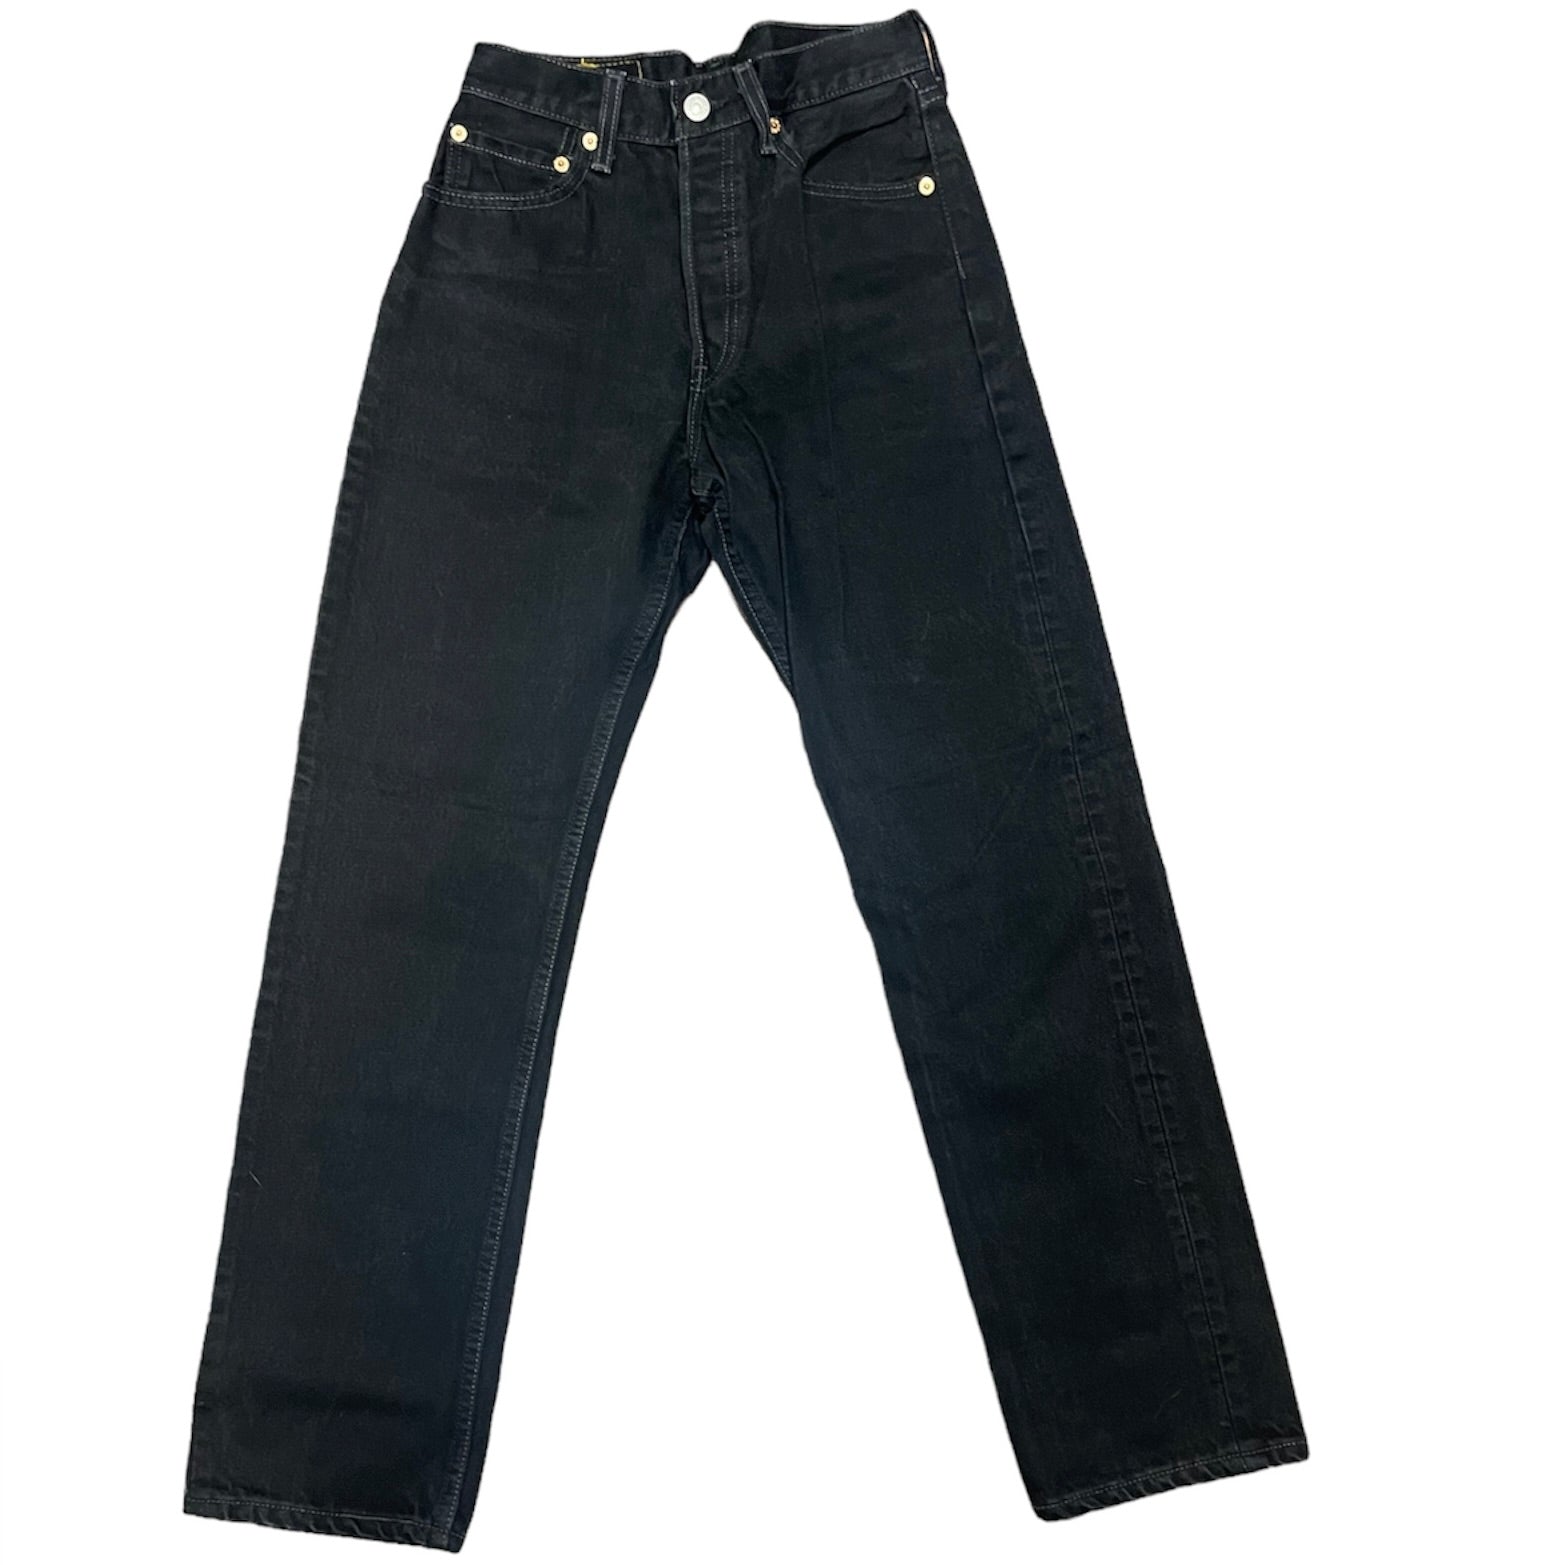 Vintage Levis 501 Black Jeans (W28/L30) (W)